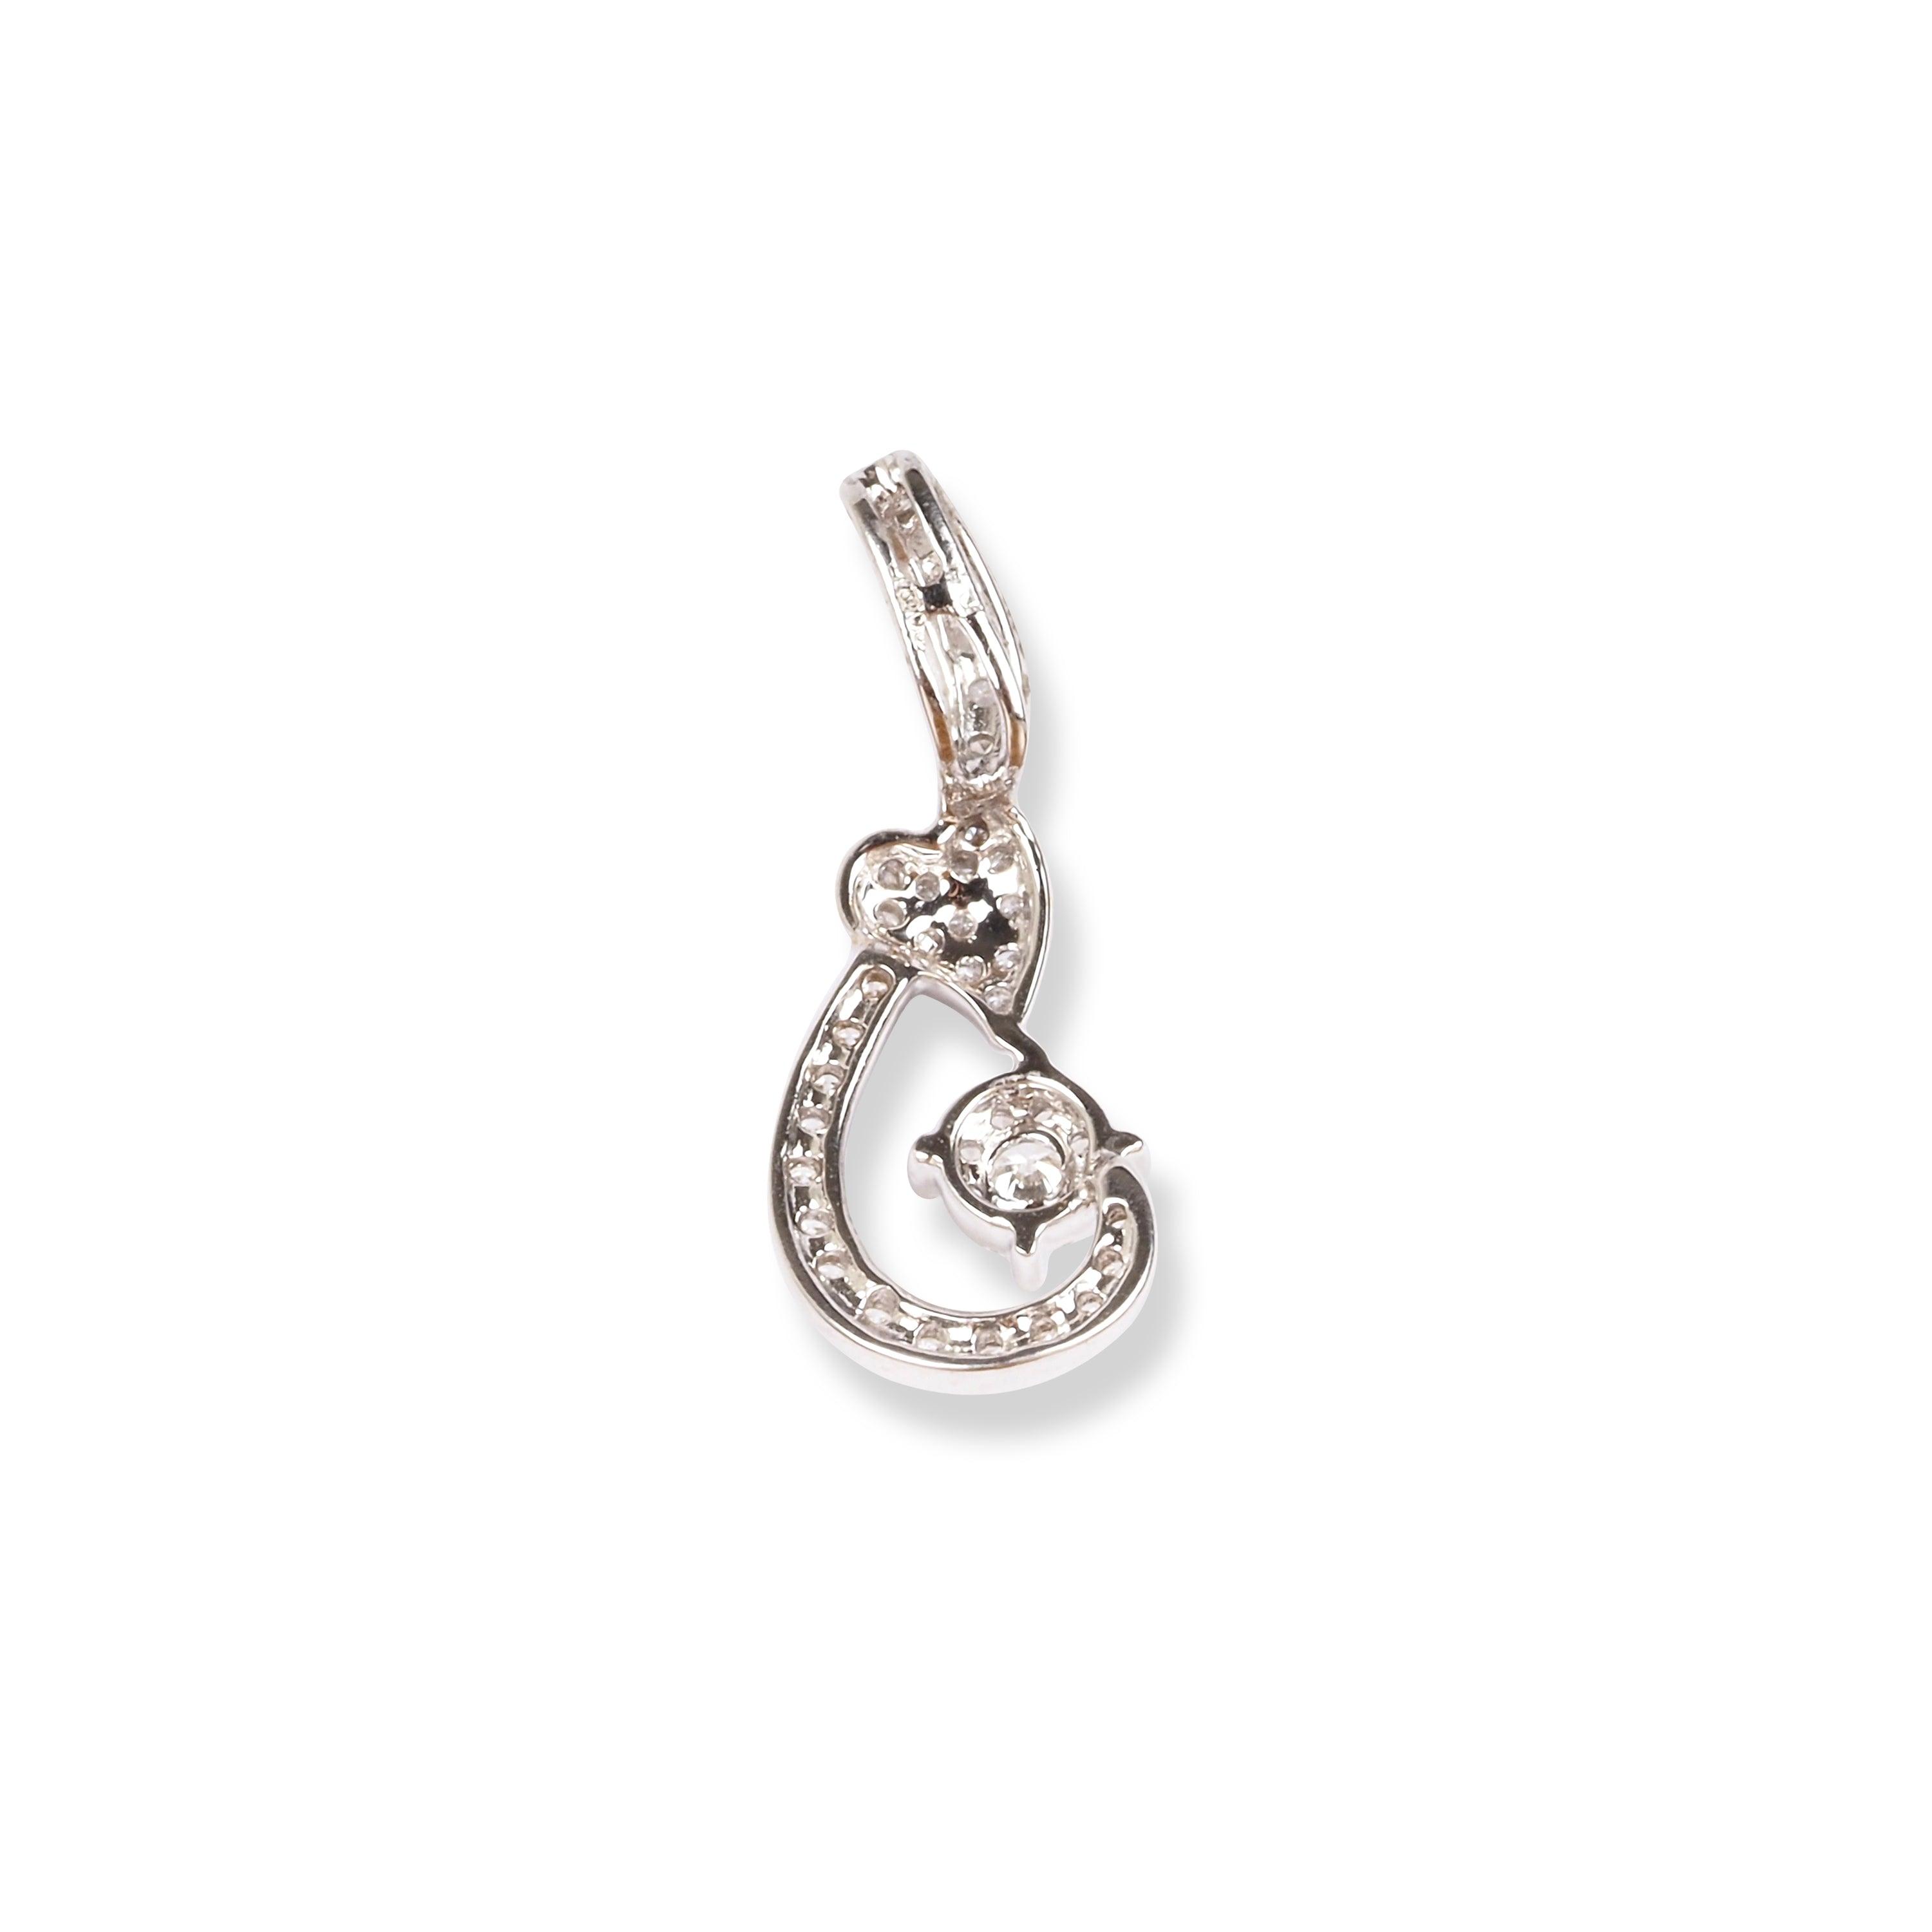 18ct White Gold Diamond Pendant with Heart Design MCS1668 - Minar Jewellers